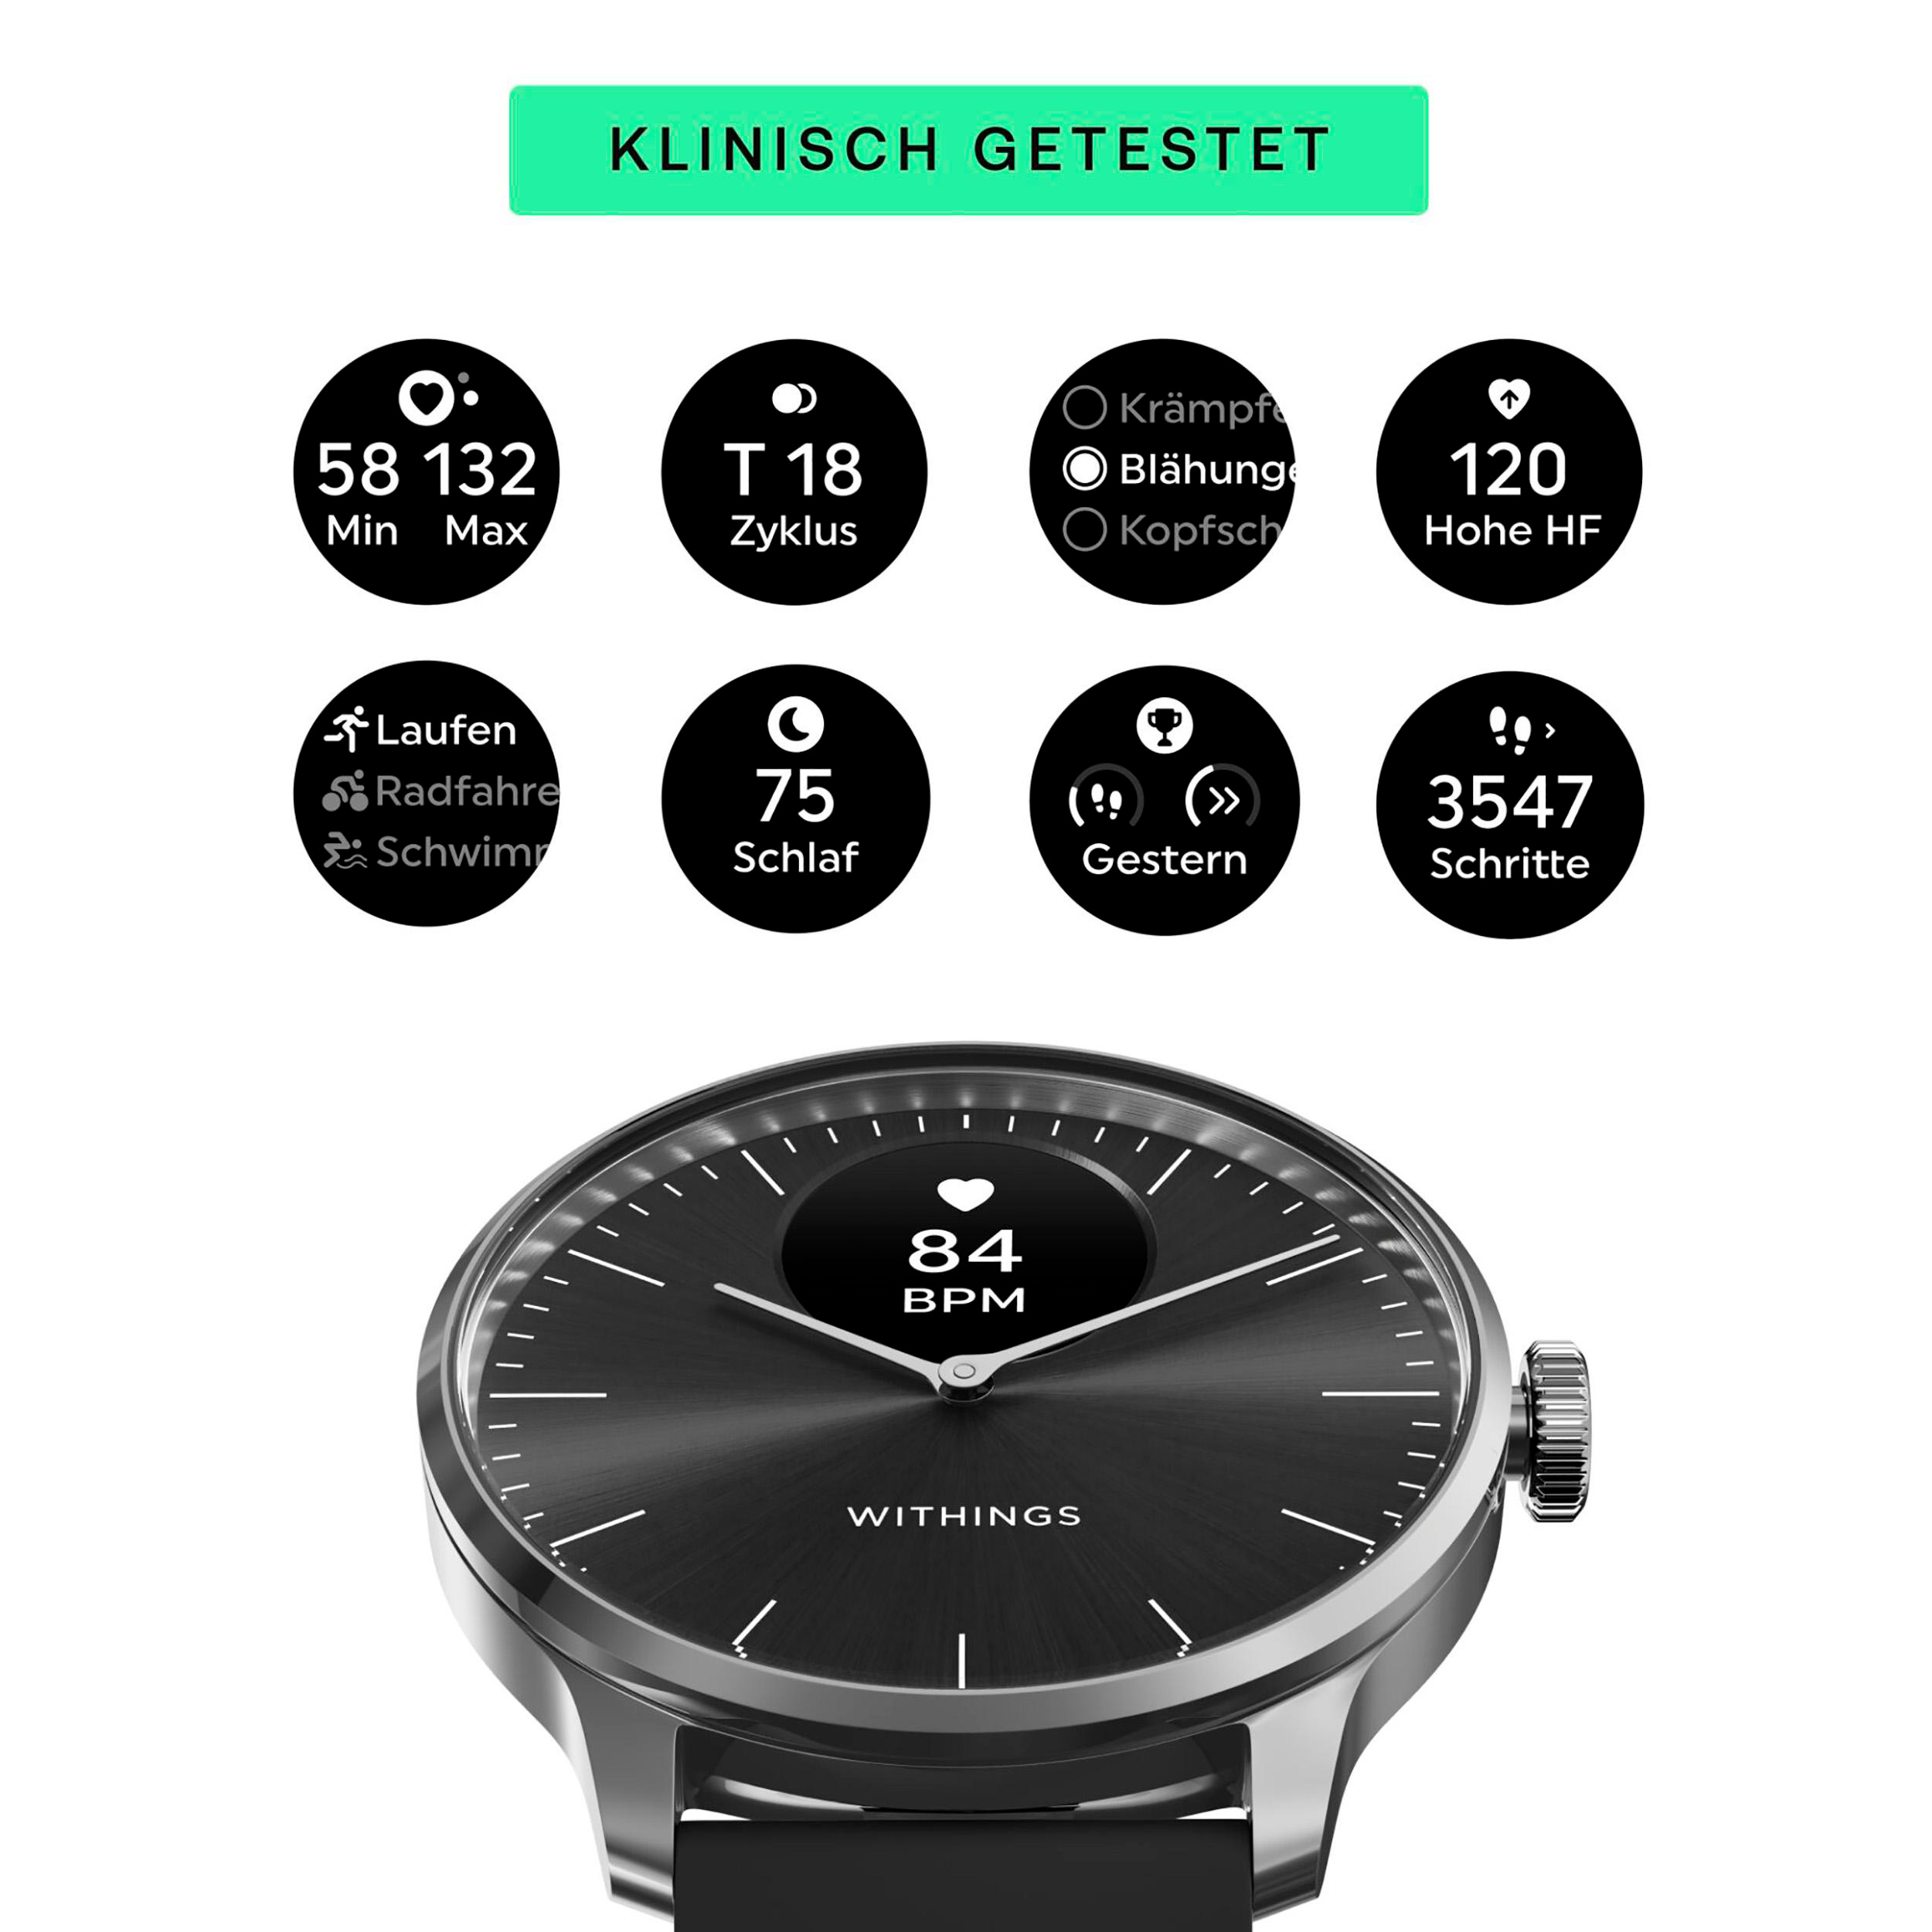 Smartwatch Armbandmaterial: Edelstahl Edelstahl, Kautschuk, ScanWatch 37 Schwarz mm, WITHINGS Light